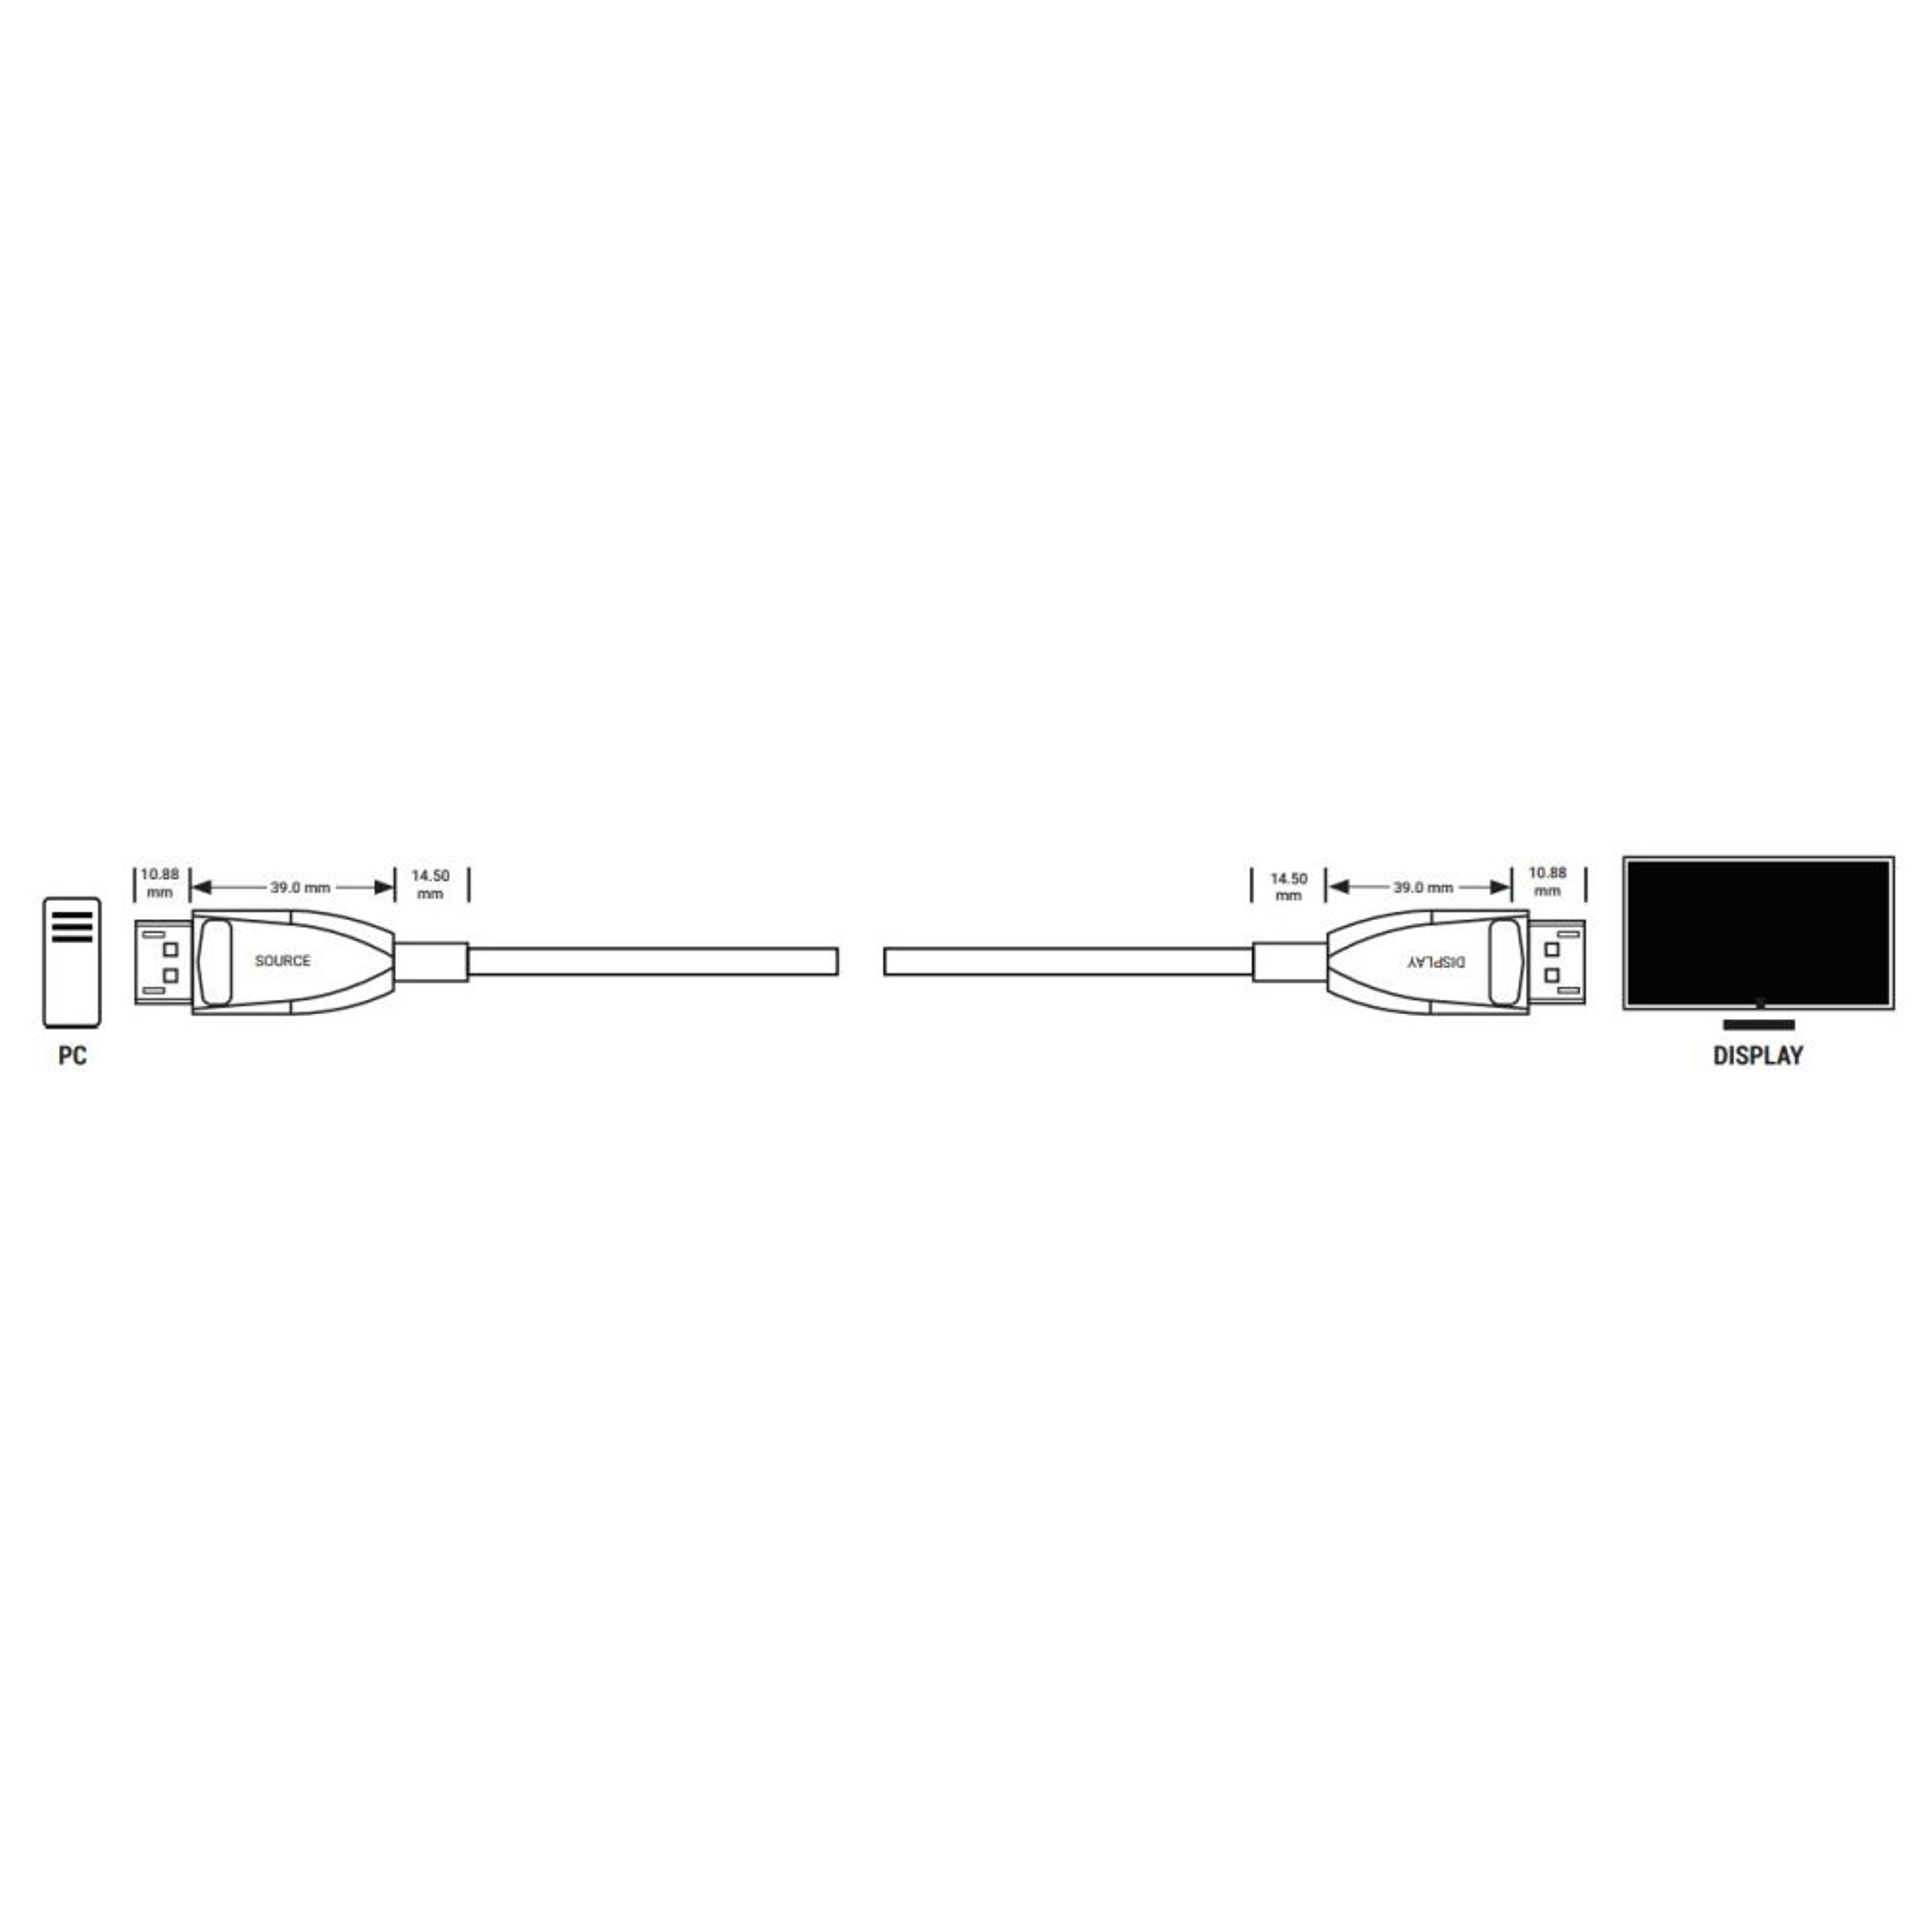 AOC-HL-DP4-10M, Active Optical Cable DisplayPort 1.4 LSZH - Black Box